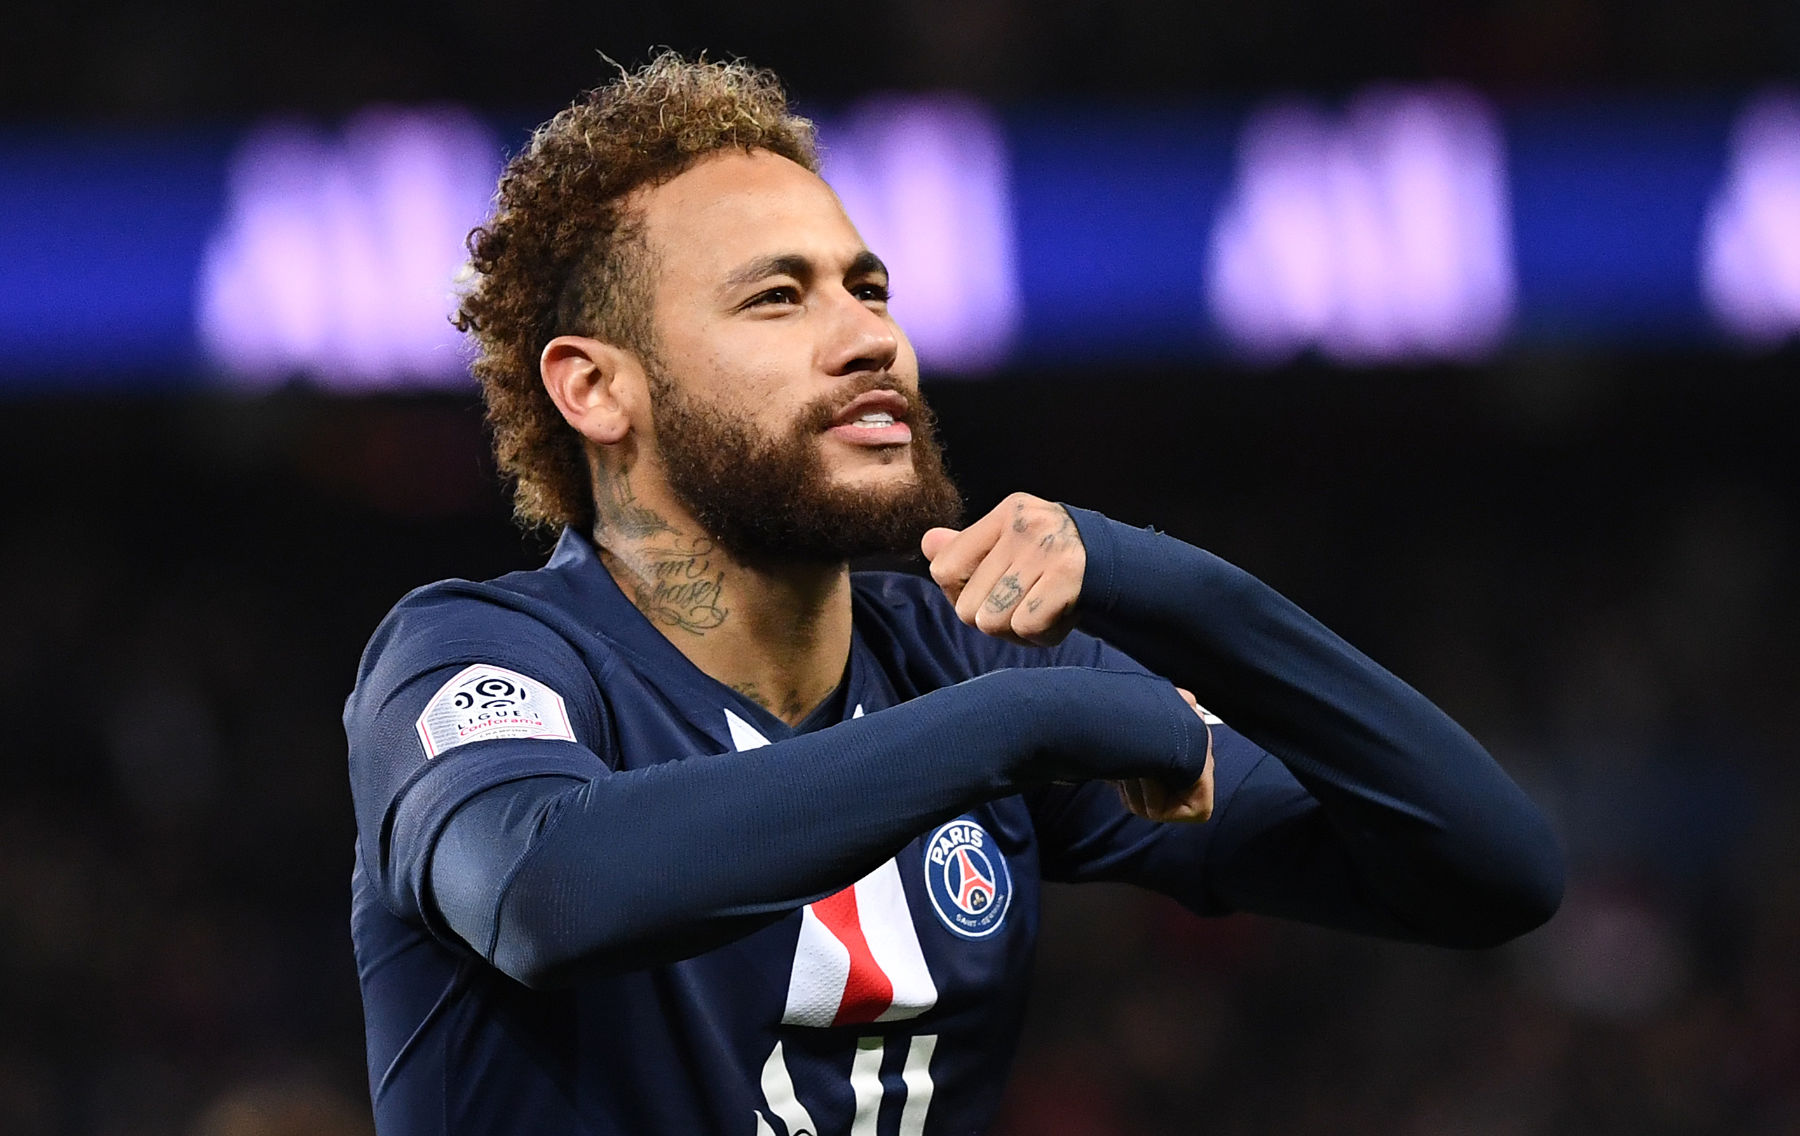 Neymar-goal-celebration-PSG-vs-Amiens-Ligue-1-2019